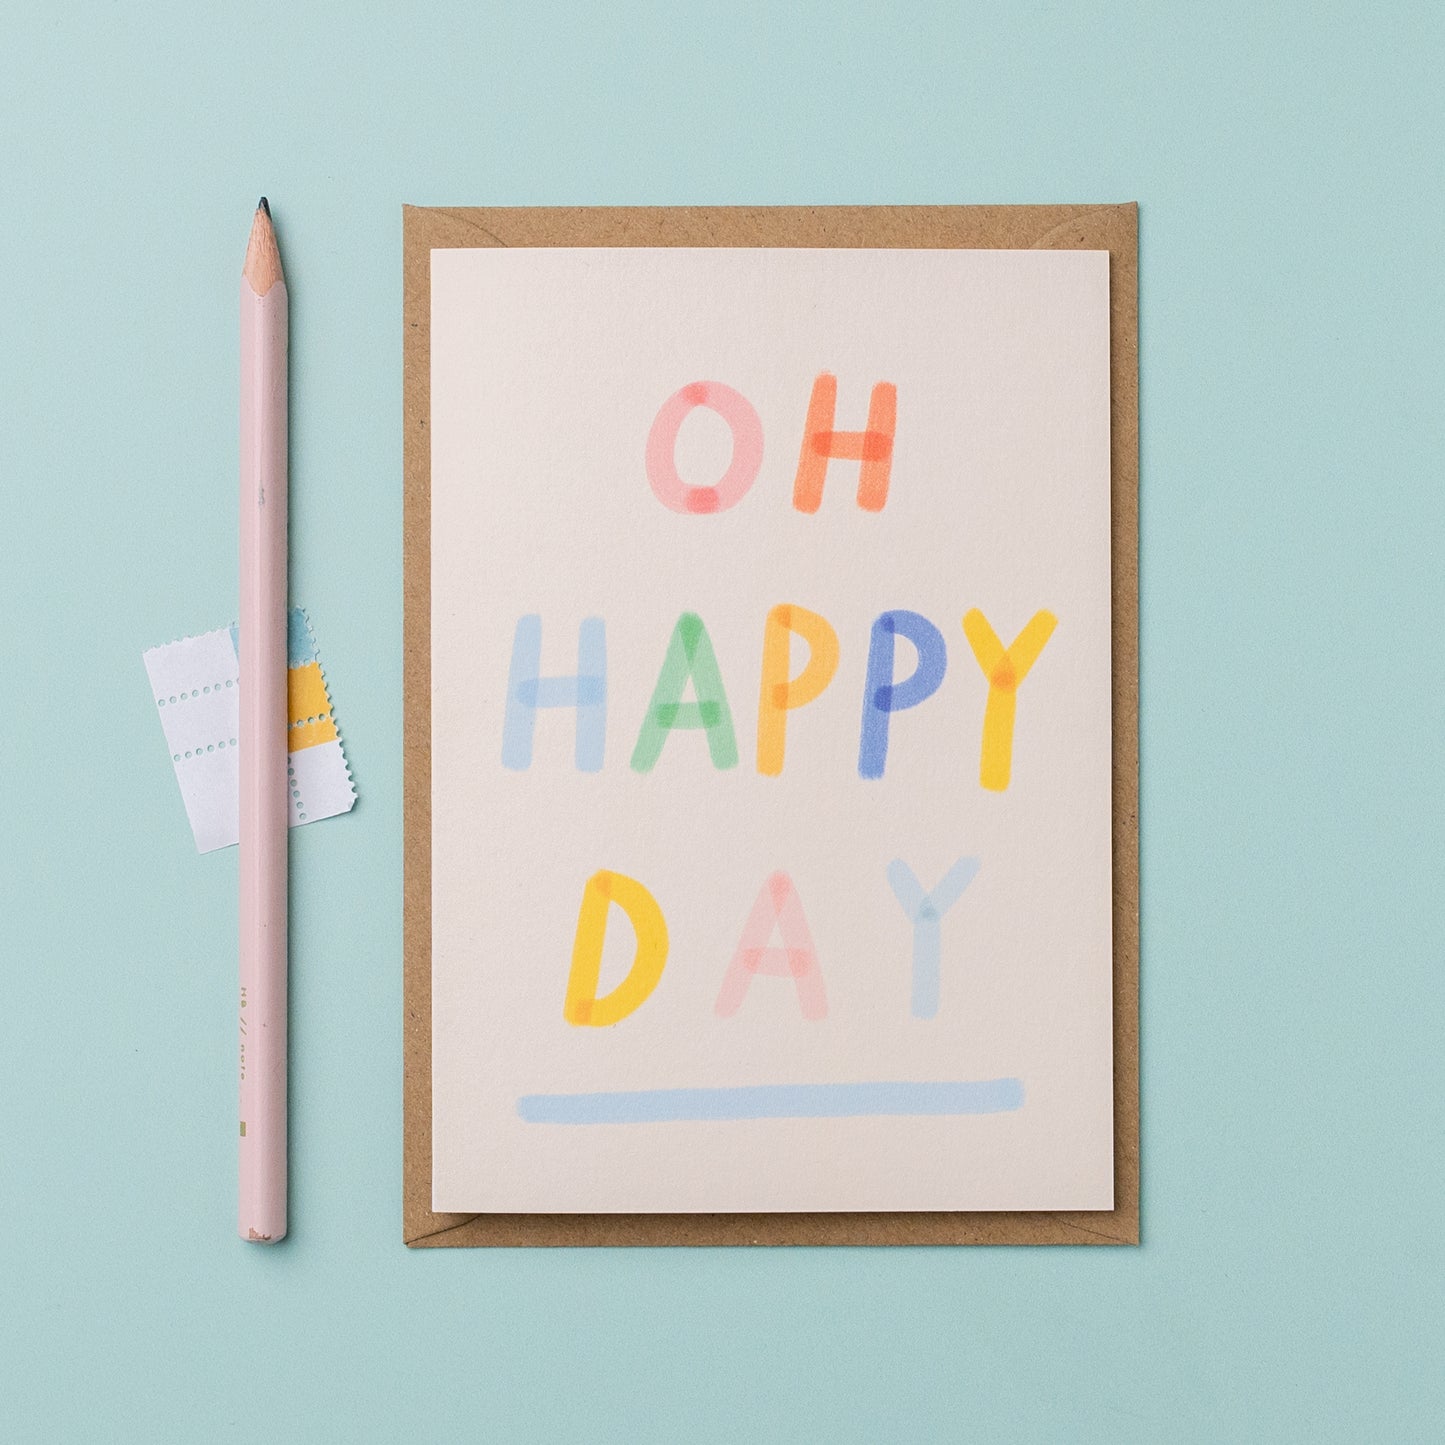 Oh happy day celebration card